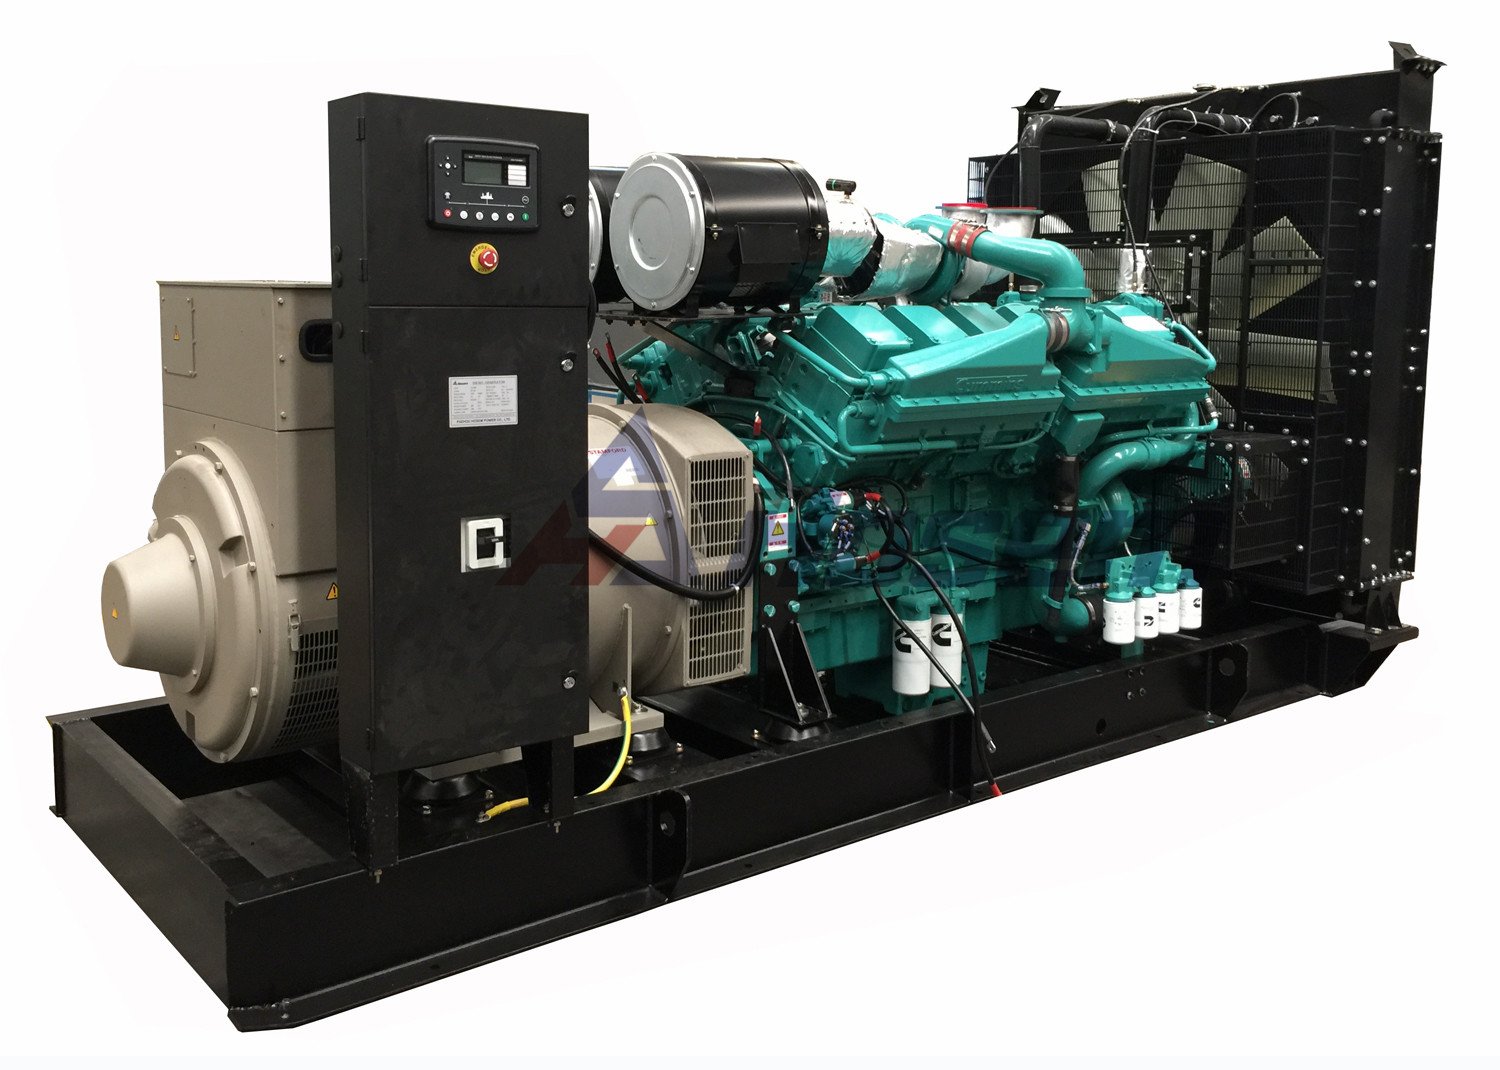 Cummins-dieselgenerator met Stamford-dynamo-output 1000kVA.